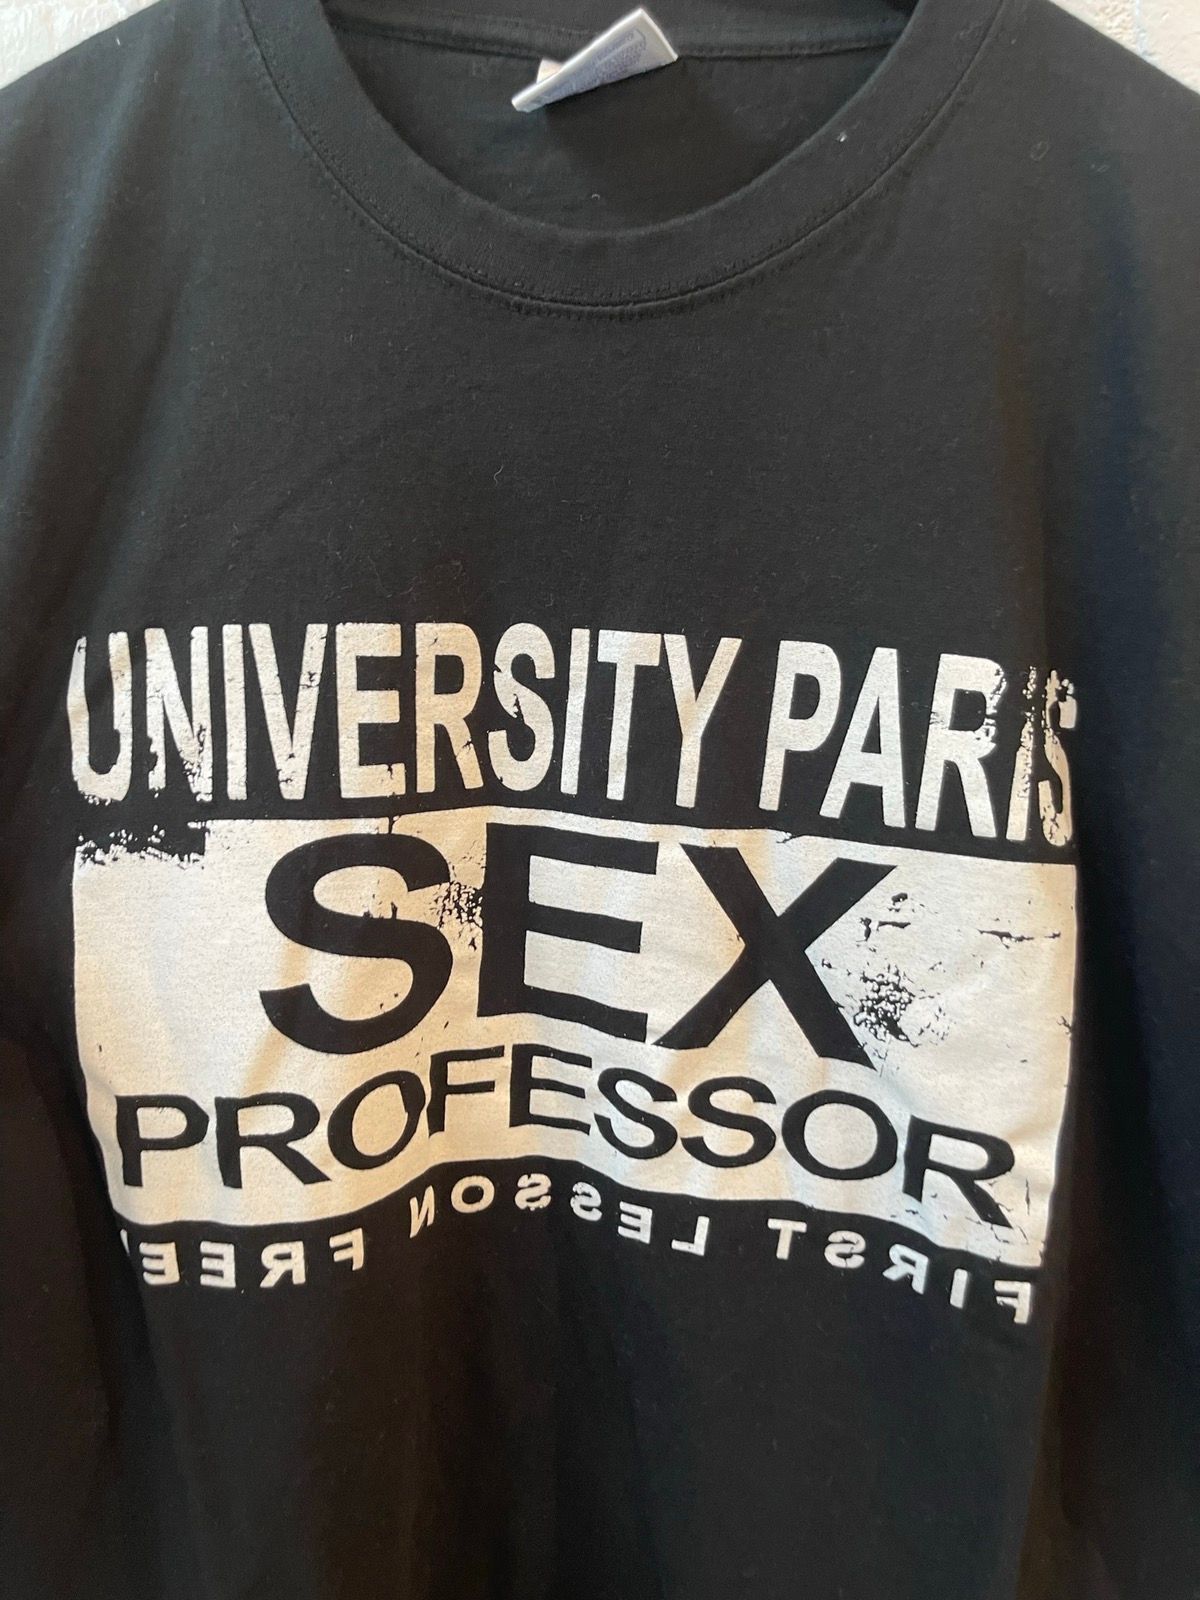 Vintage SEX PROFESSOR University PARIS Black Shirt